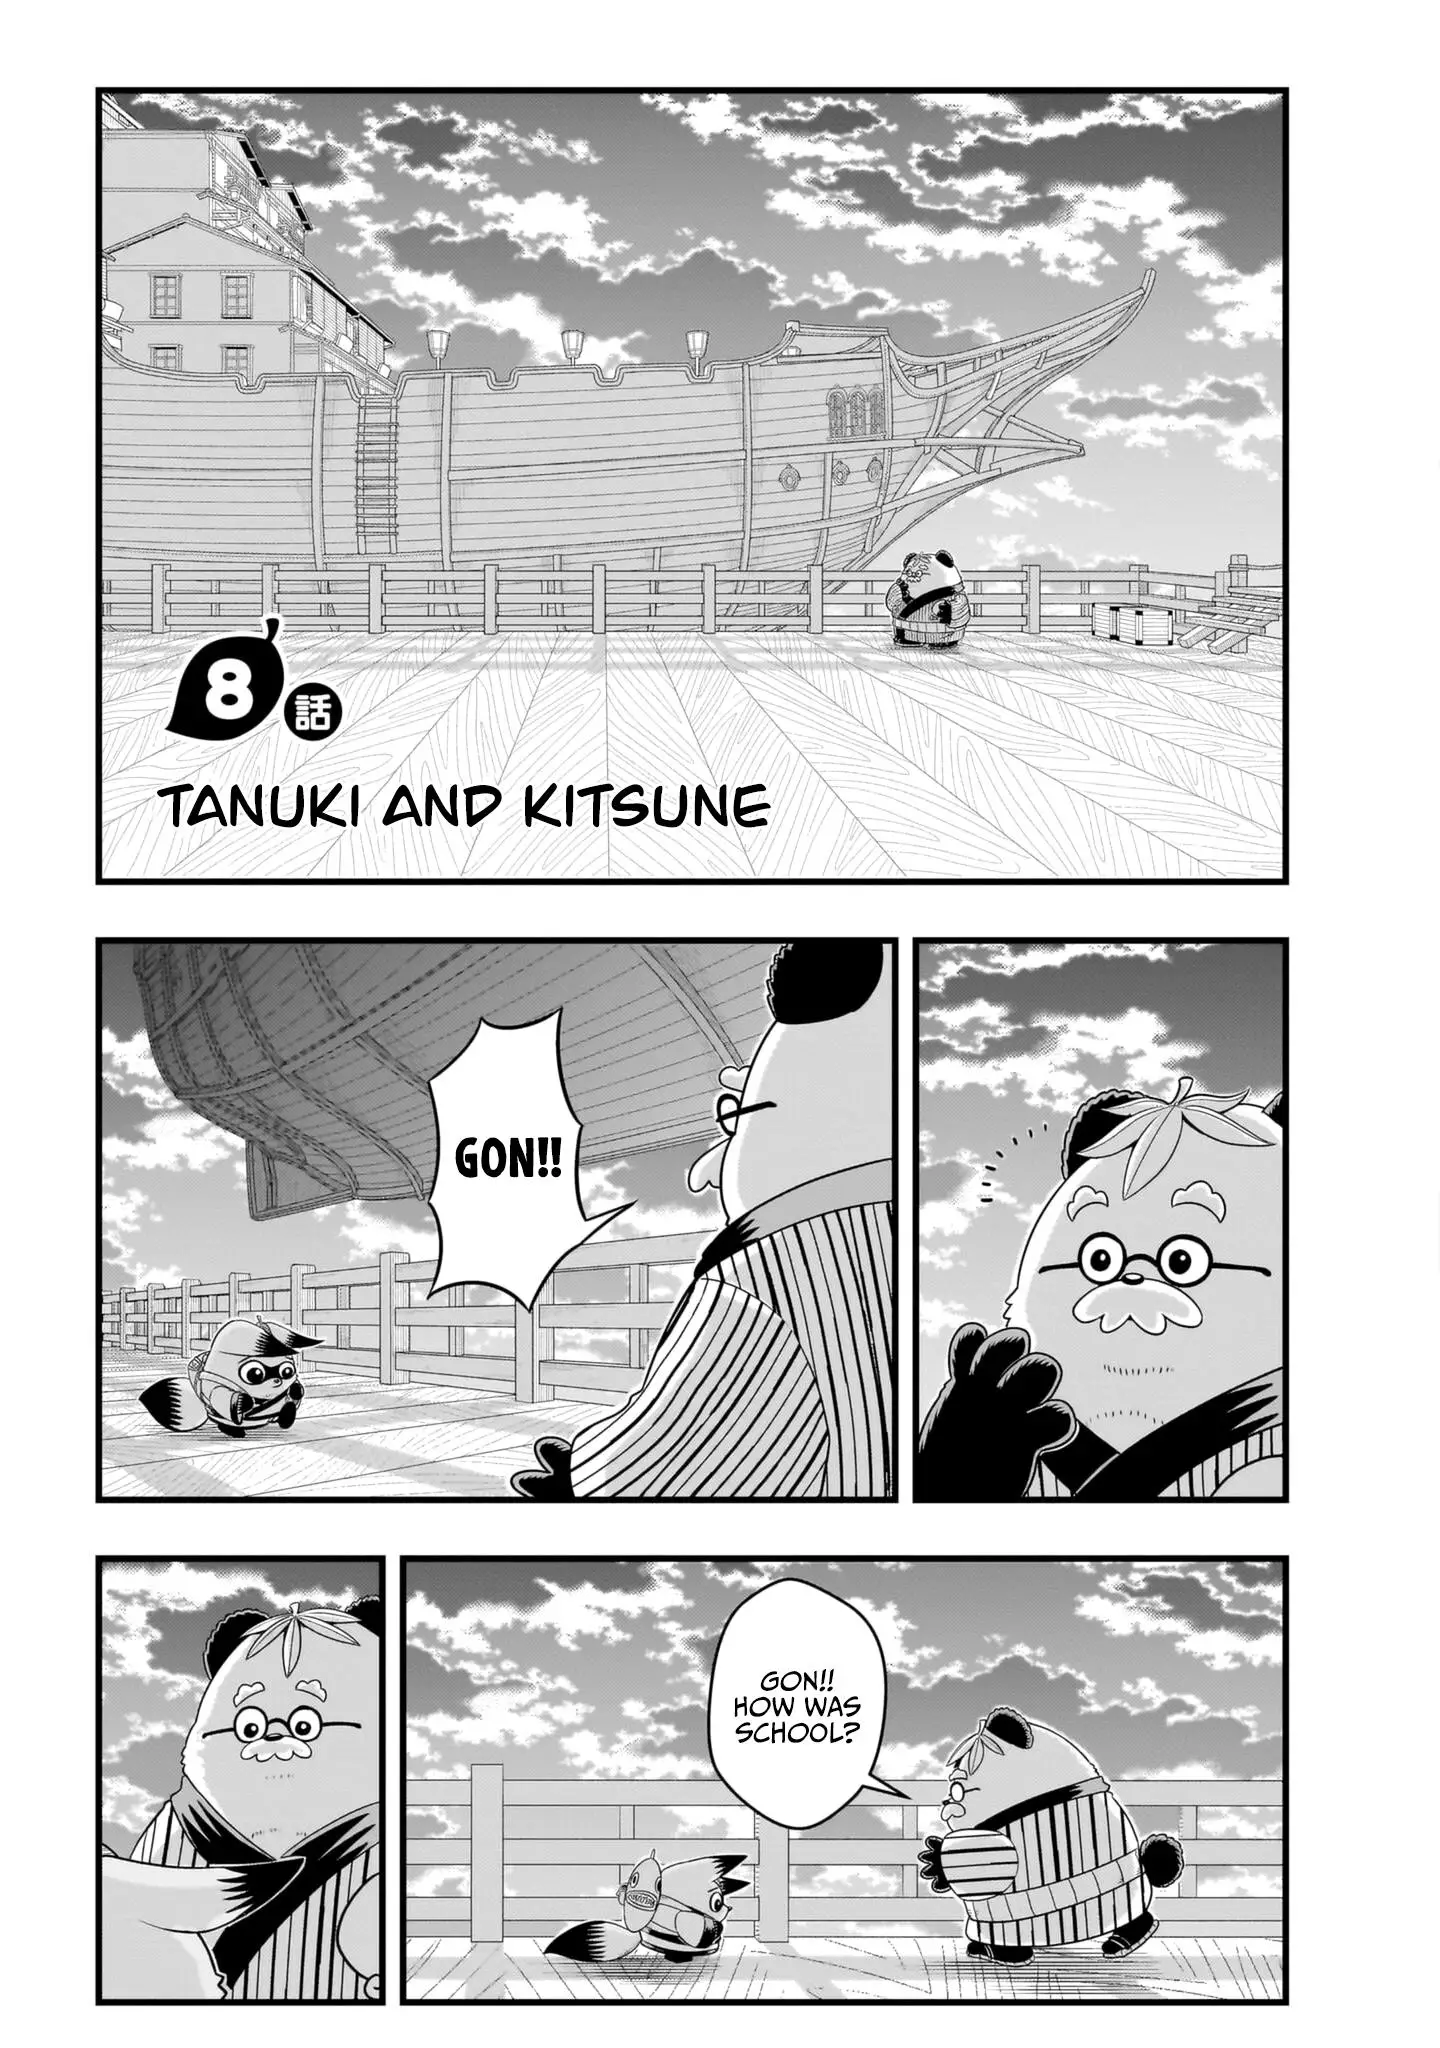 Tanukitsune No Gon - 8 page 1-57f59edf